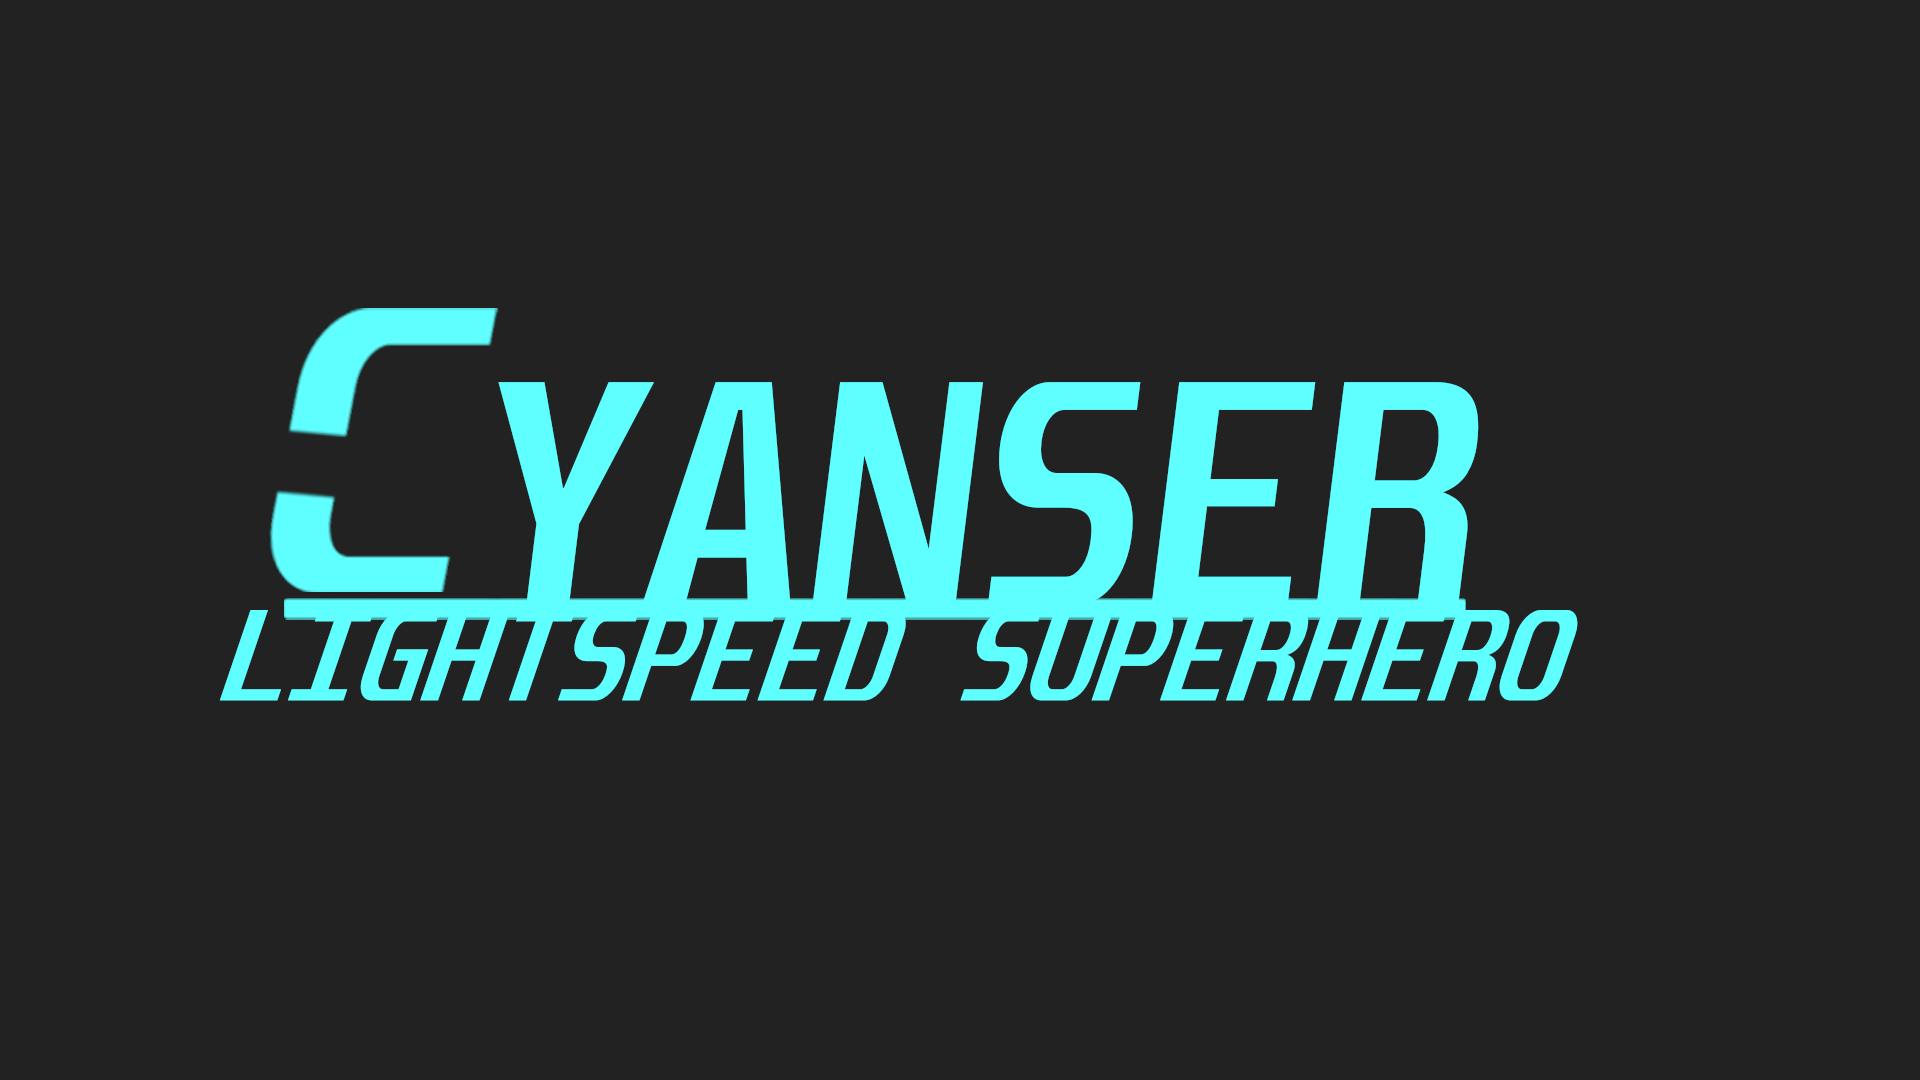 Cyanser: Lightspeed Superhero